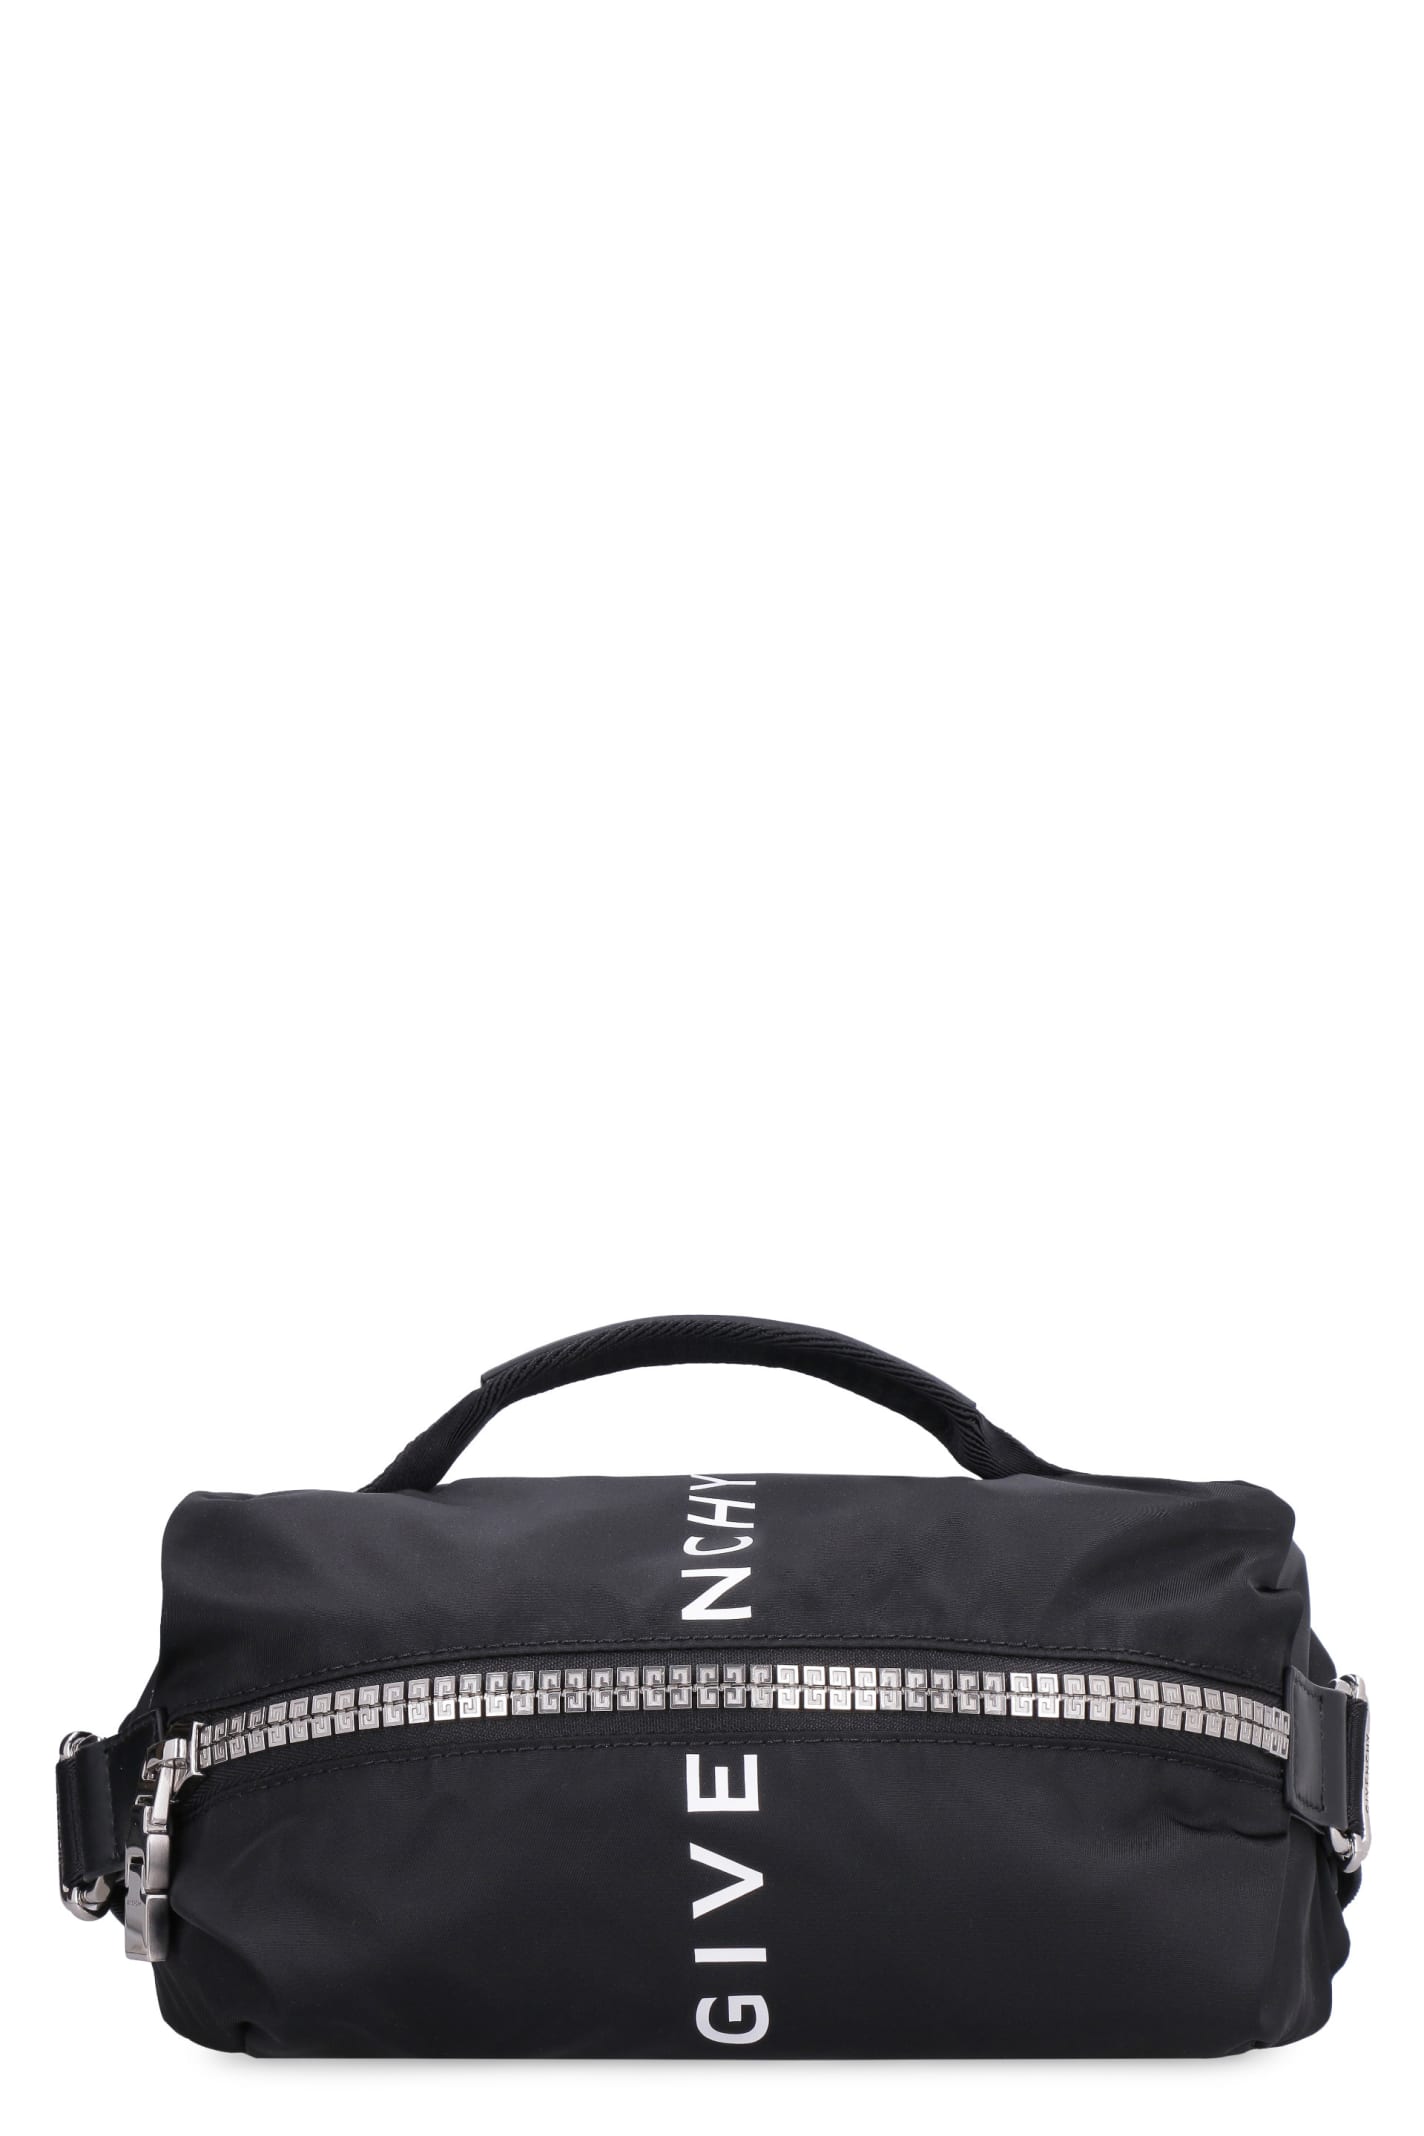 Givenchy G-zip Nylon Belt Bag